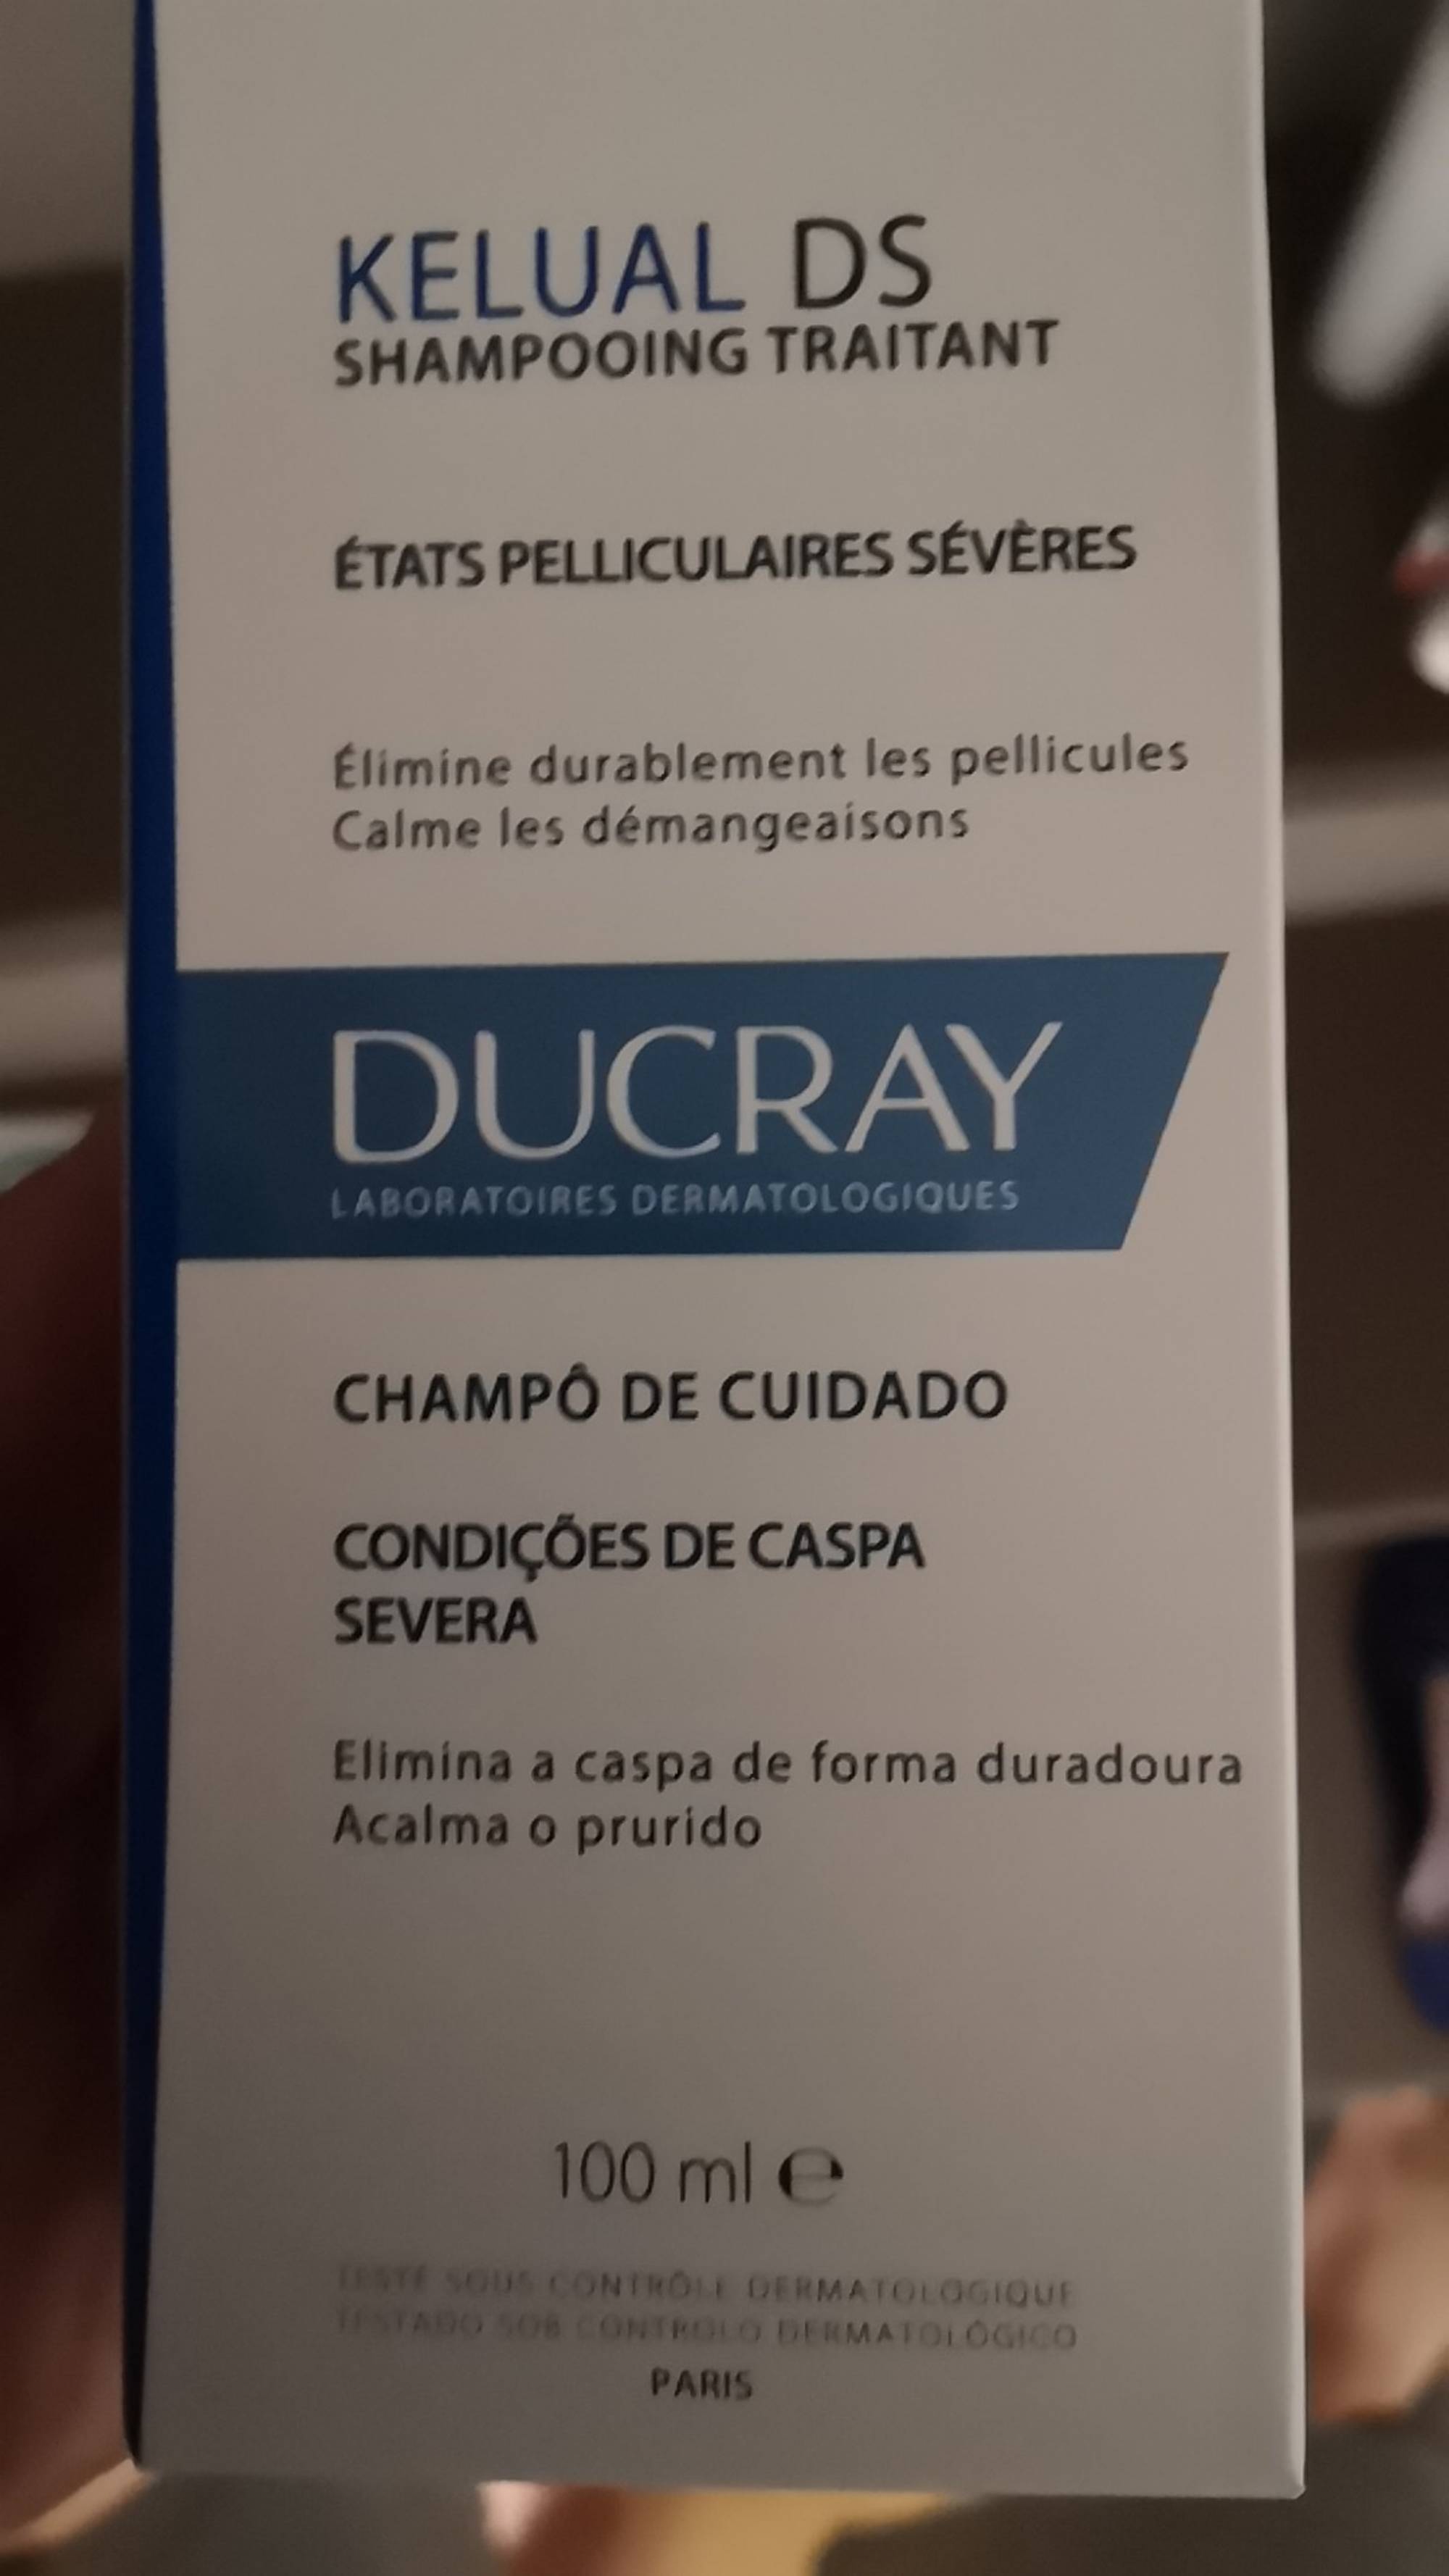 DUCRAY - Kelual DS - Shampooing traitant